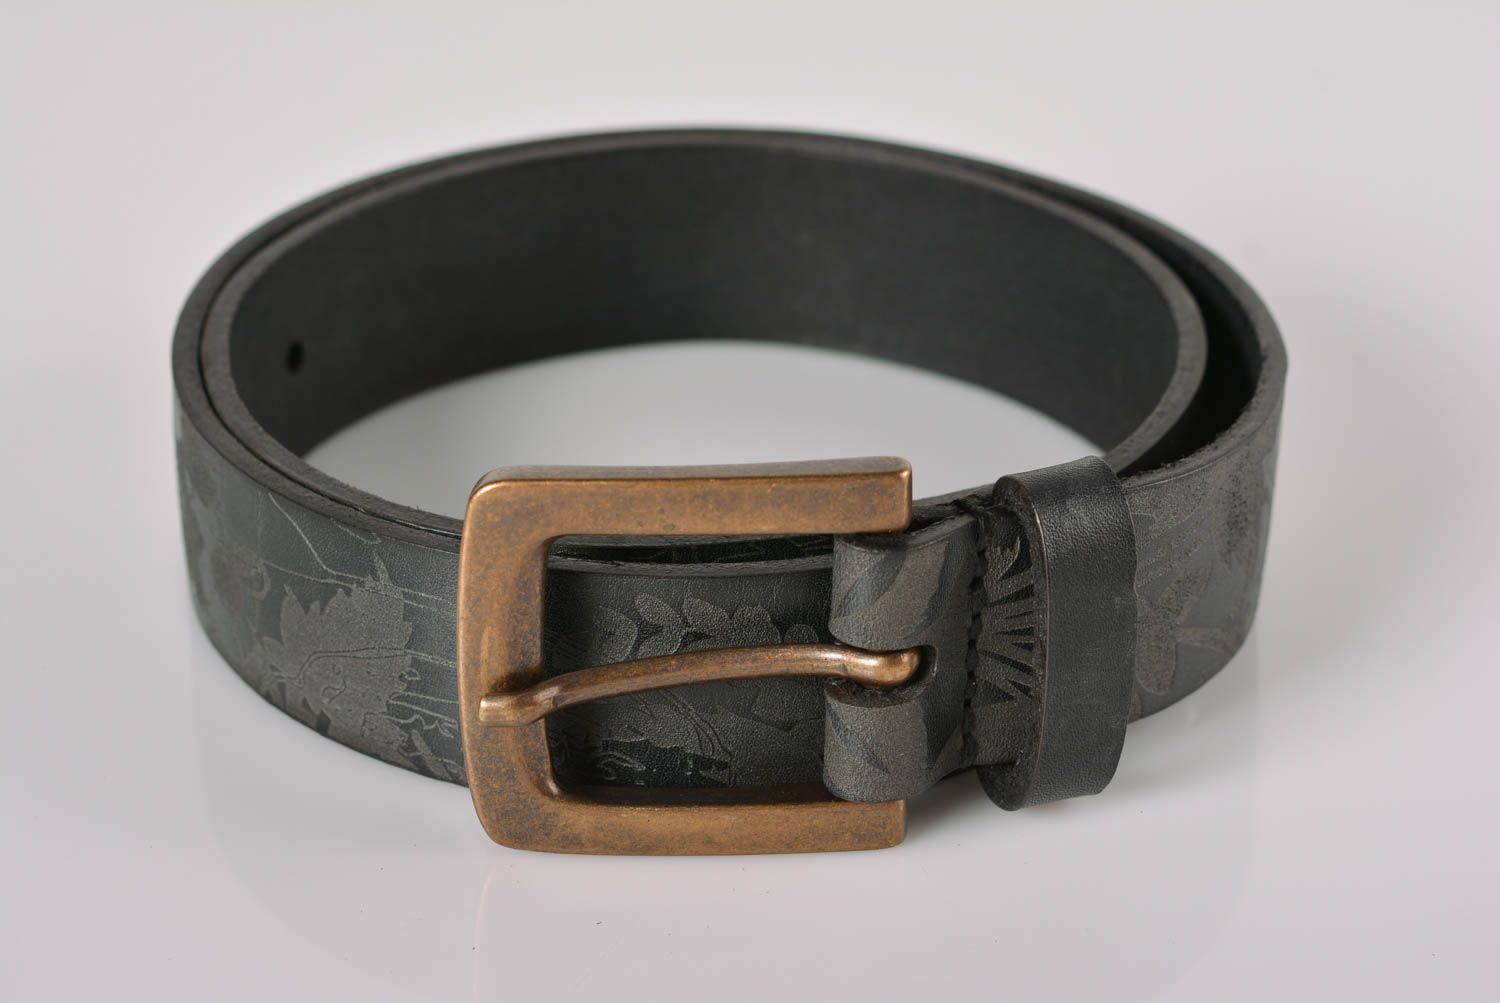 Handmade leather belt designer belts leather goods men accessories gifts for him photo 1